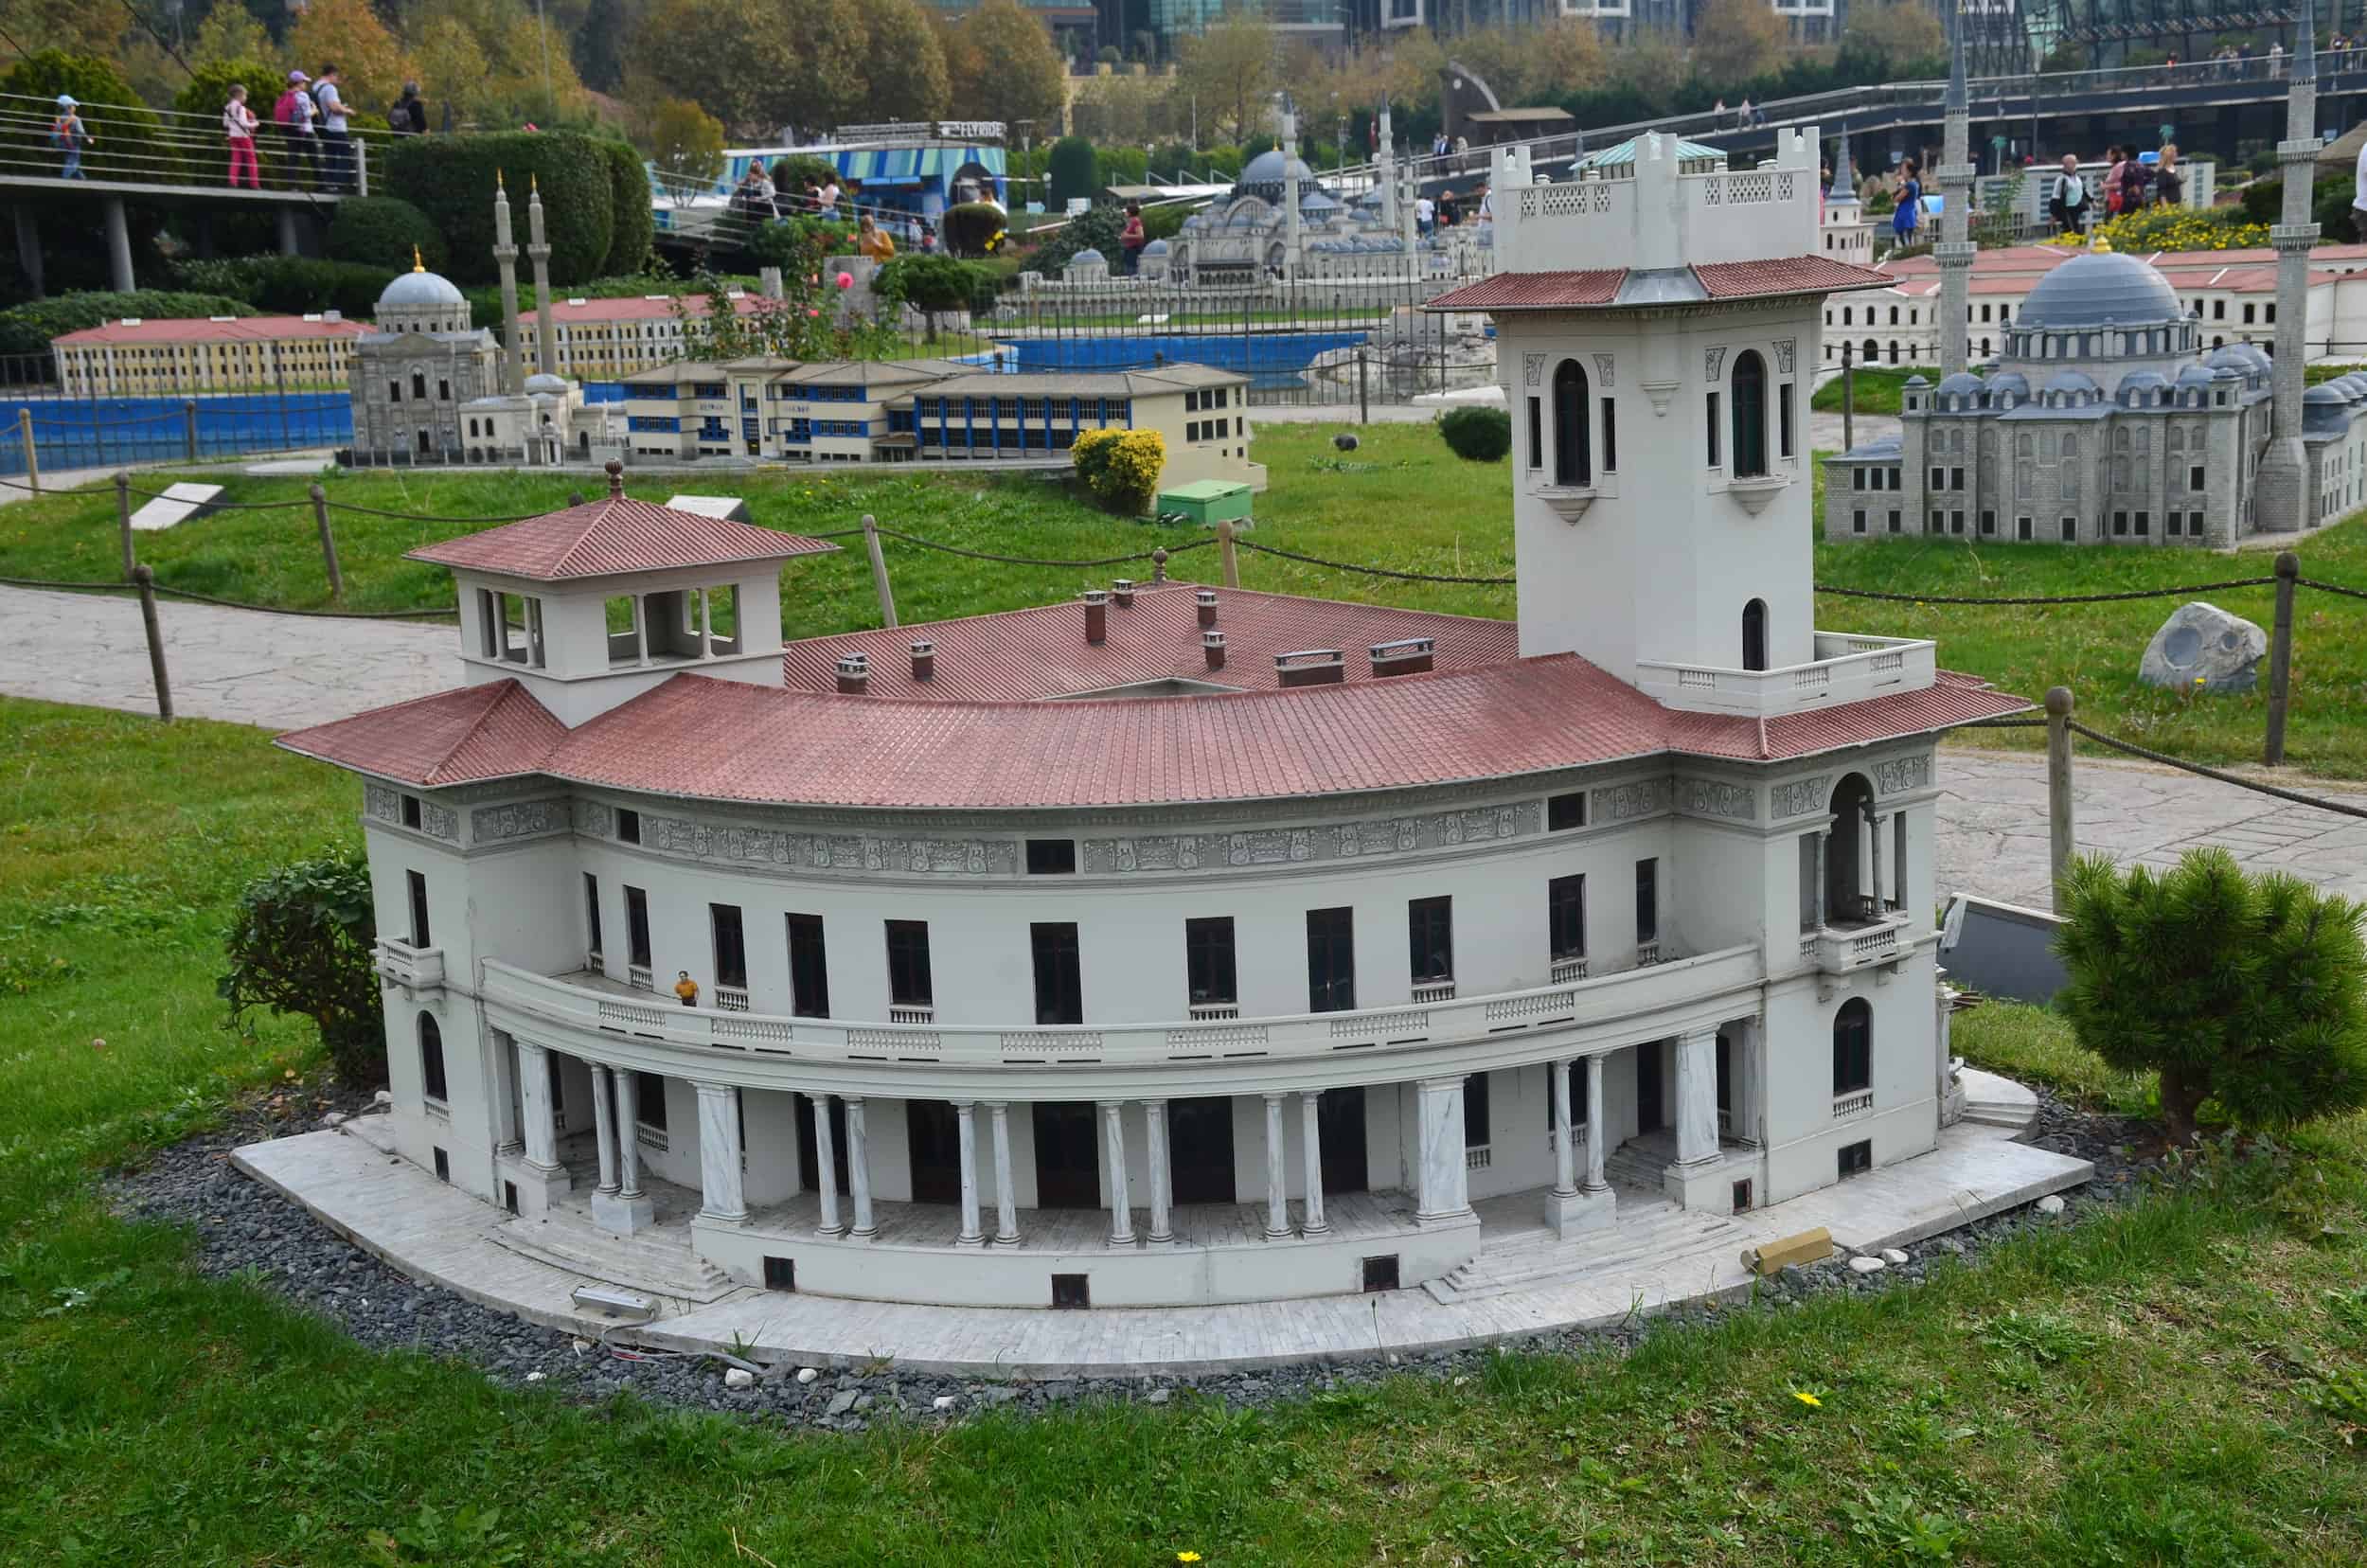 Model of the Khedive Palace, Çubuklu, 20th century at Miniatürk in Istanbul, Turkey